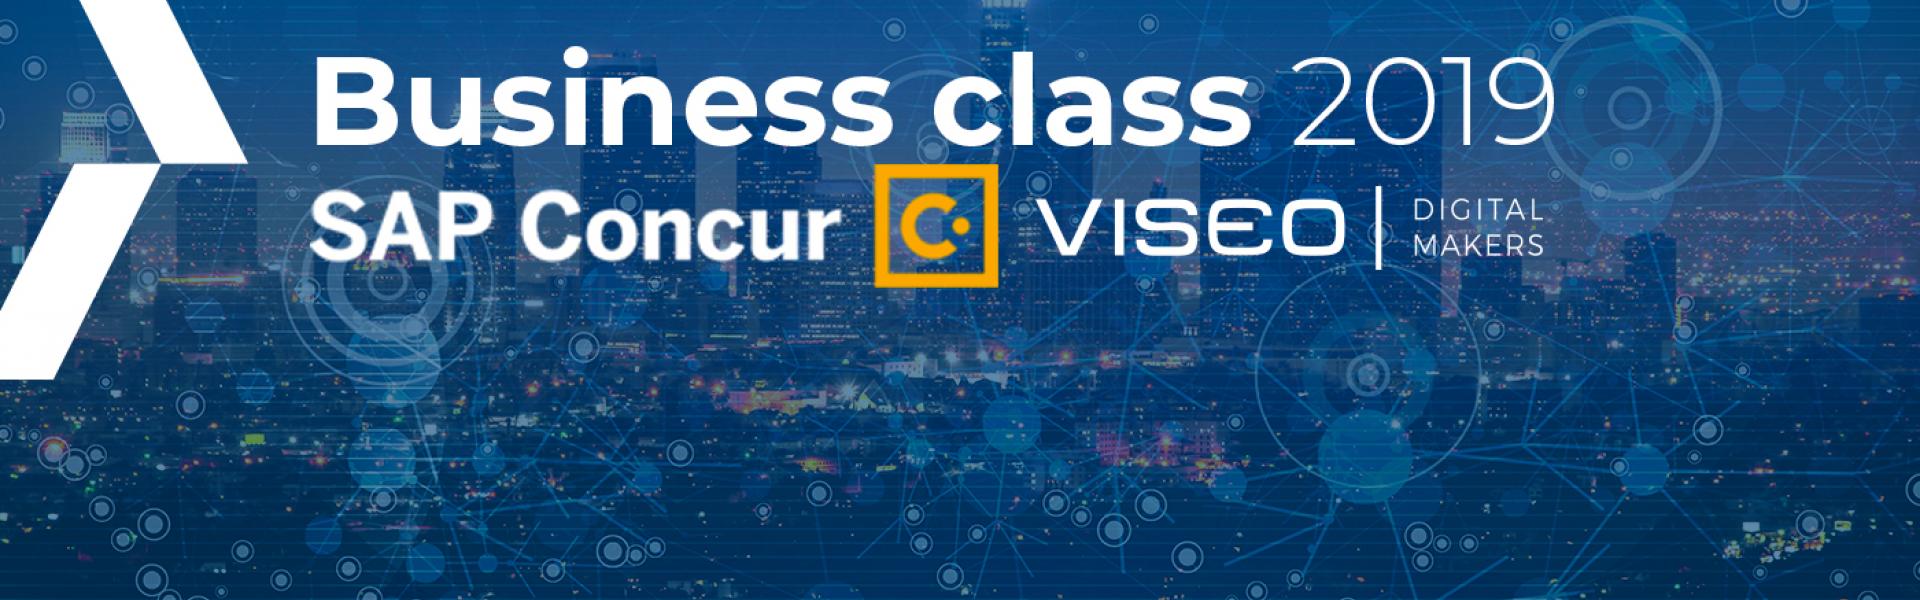 SAP Concur Business Class by VISEO